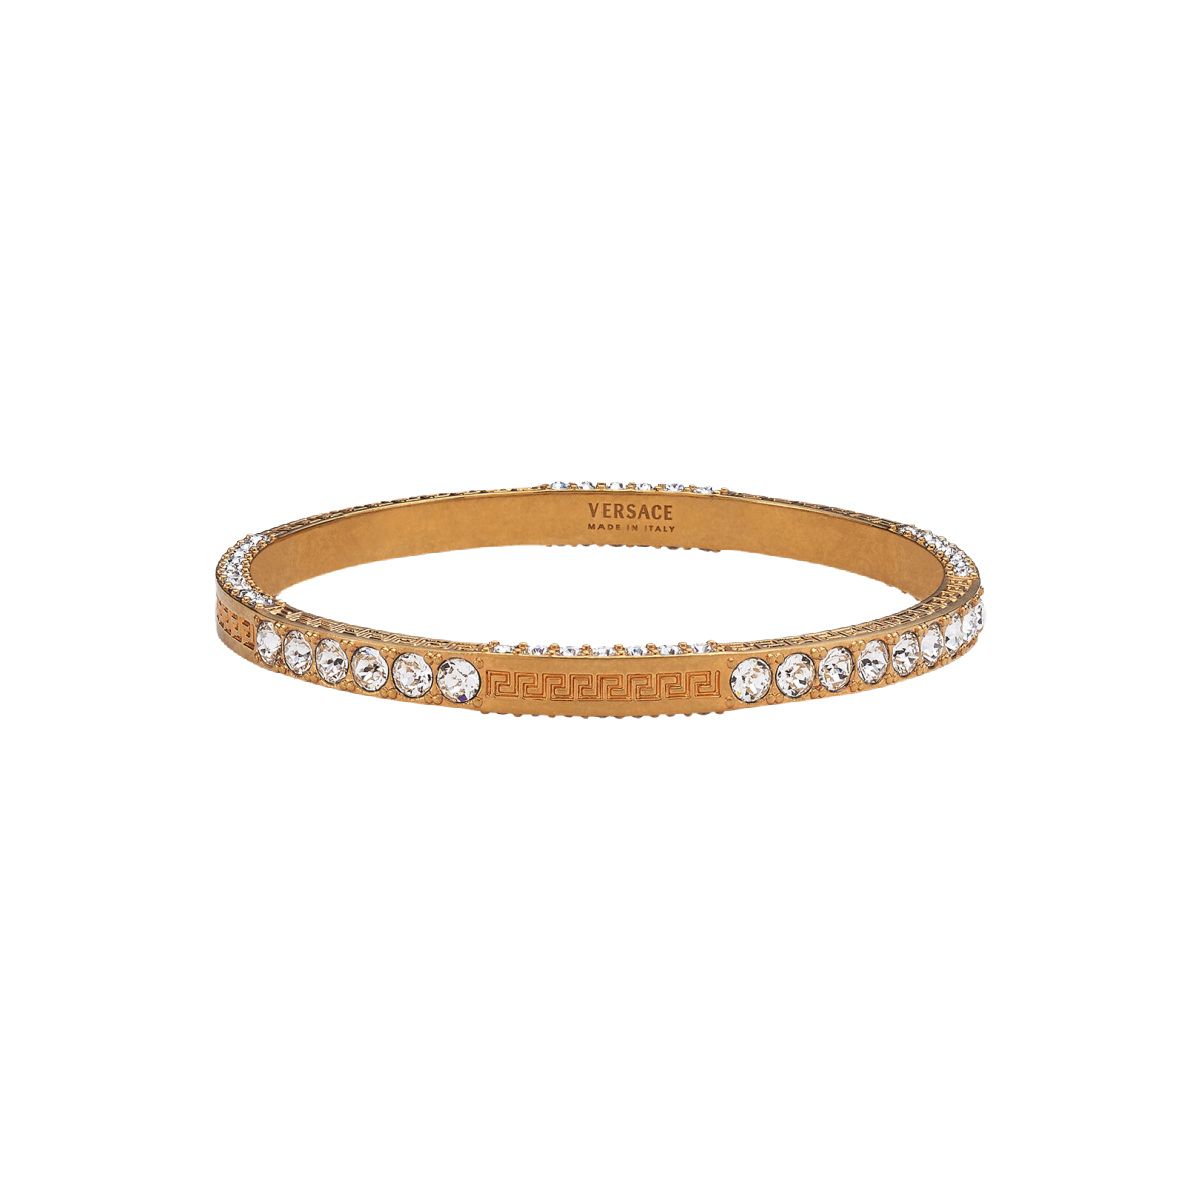 Gold Brass bracelet Versace - GenesinlifeShops Seychelles